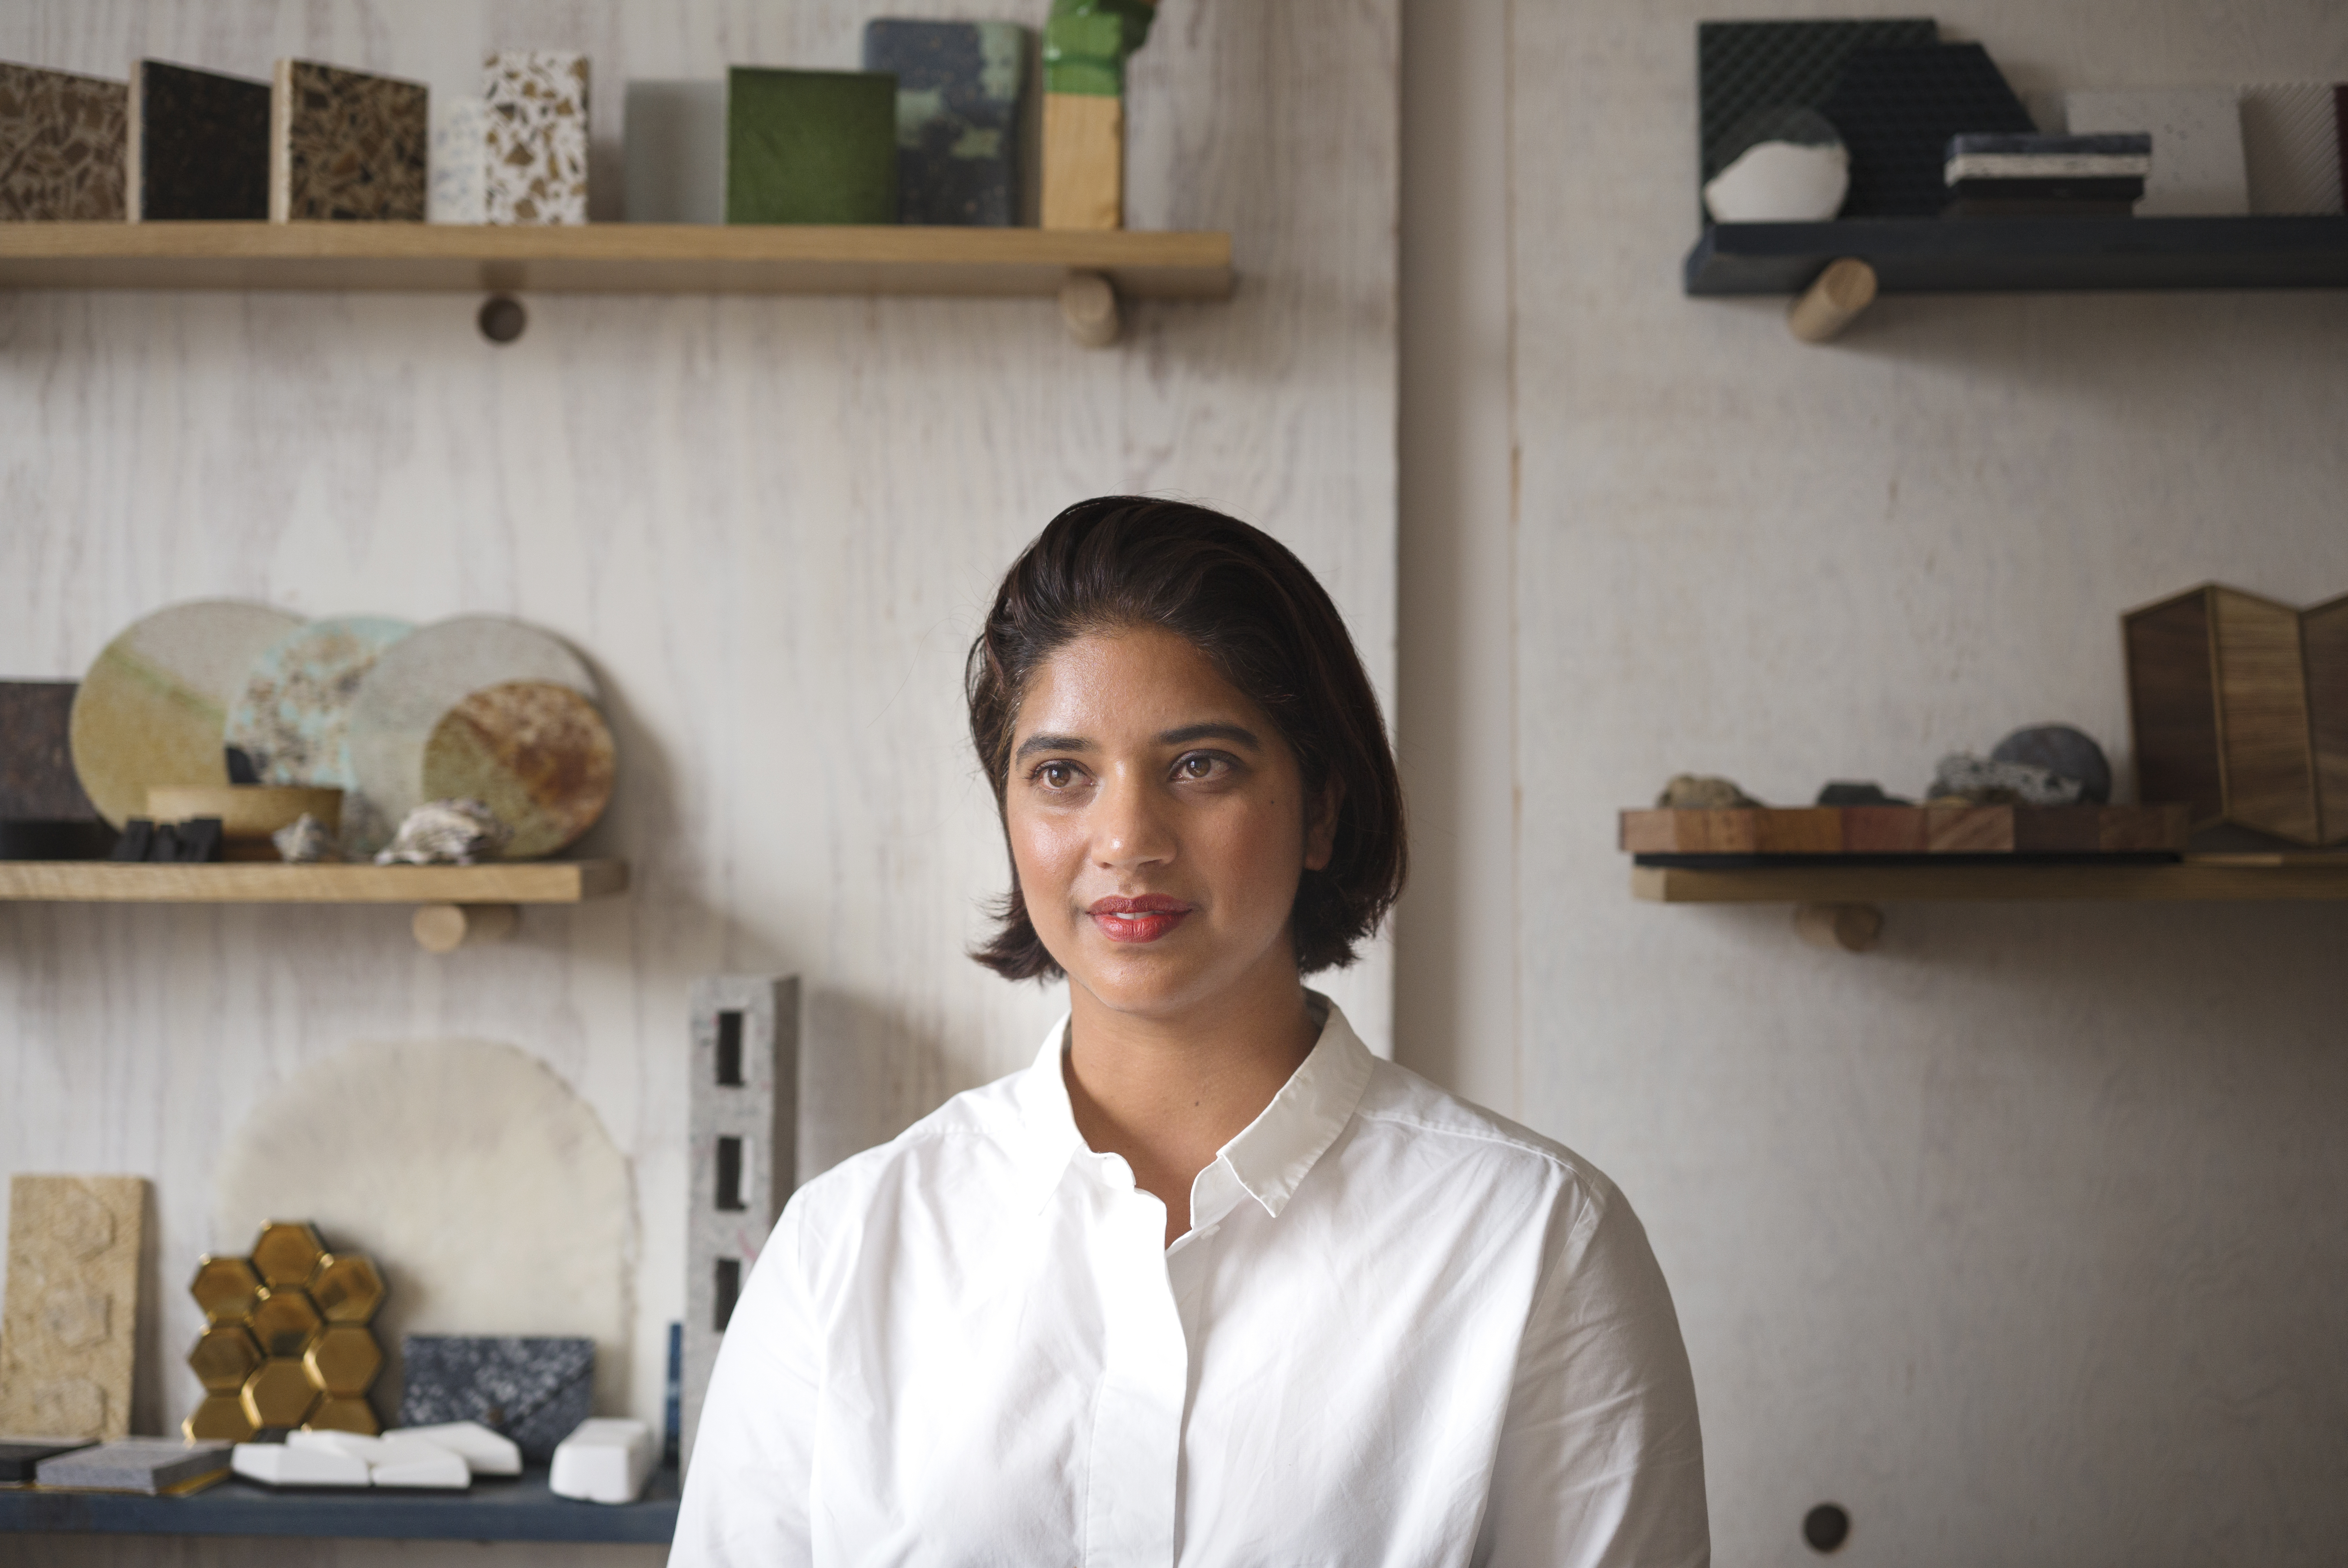 Designer Seetal Solanki is using London identity to bring magic to classic footwear design